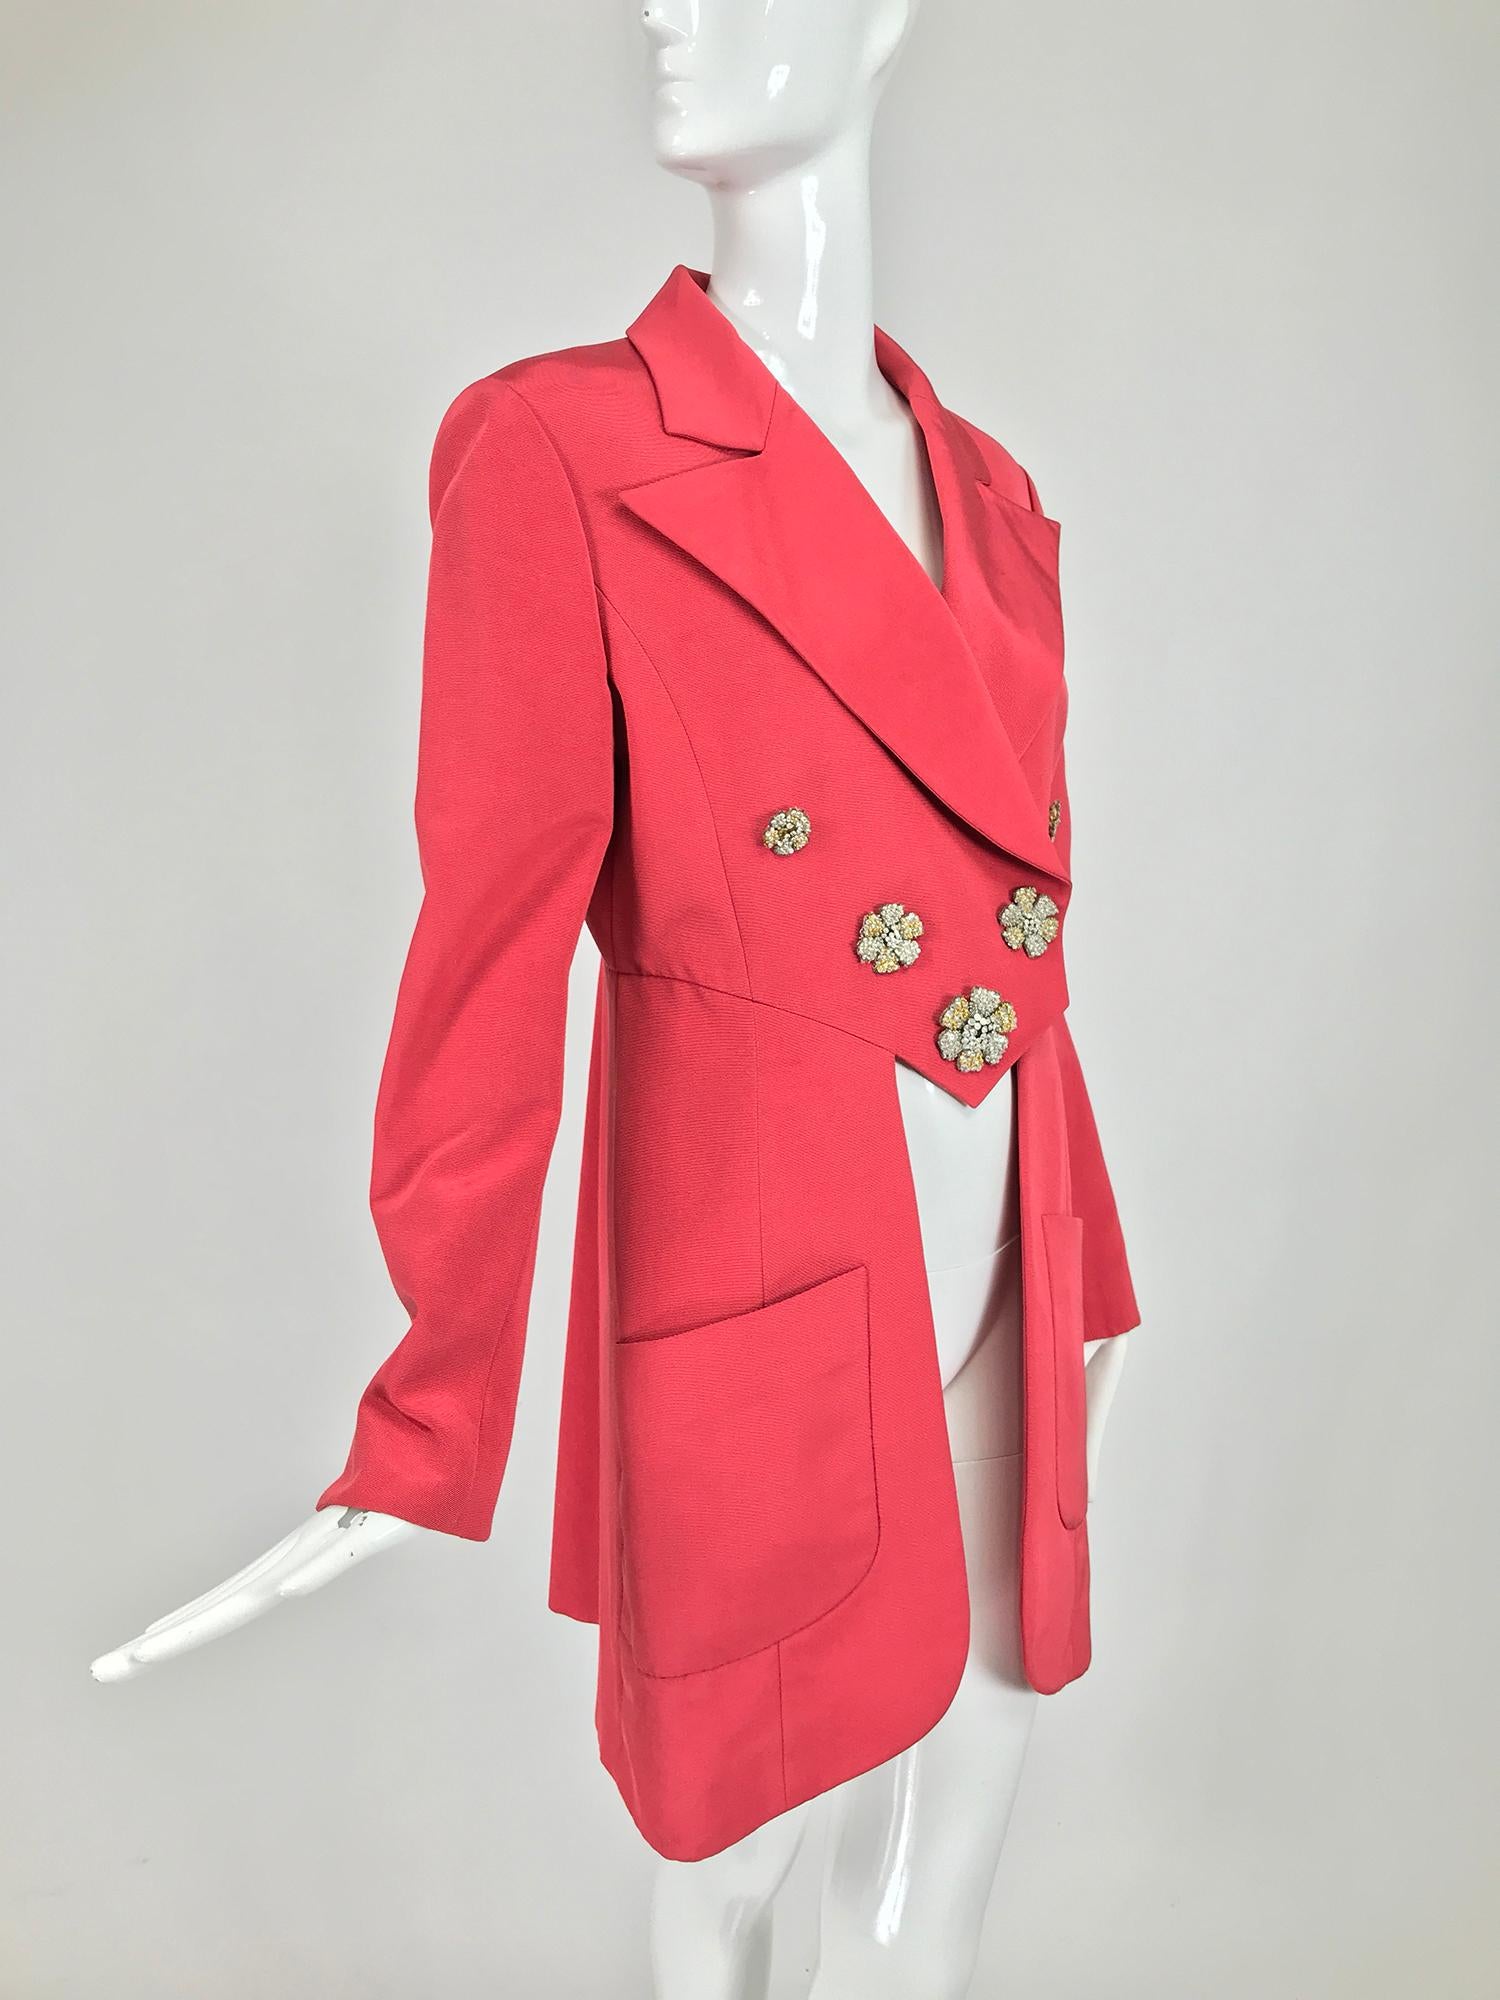 Karl Lagerfeld Coral Red Silk Faille Reddingote Style Coat 1990s 1